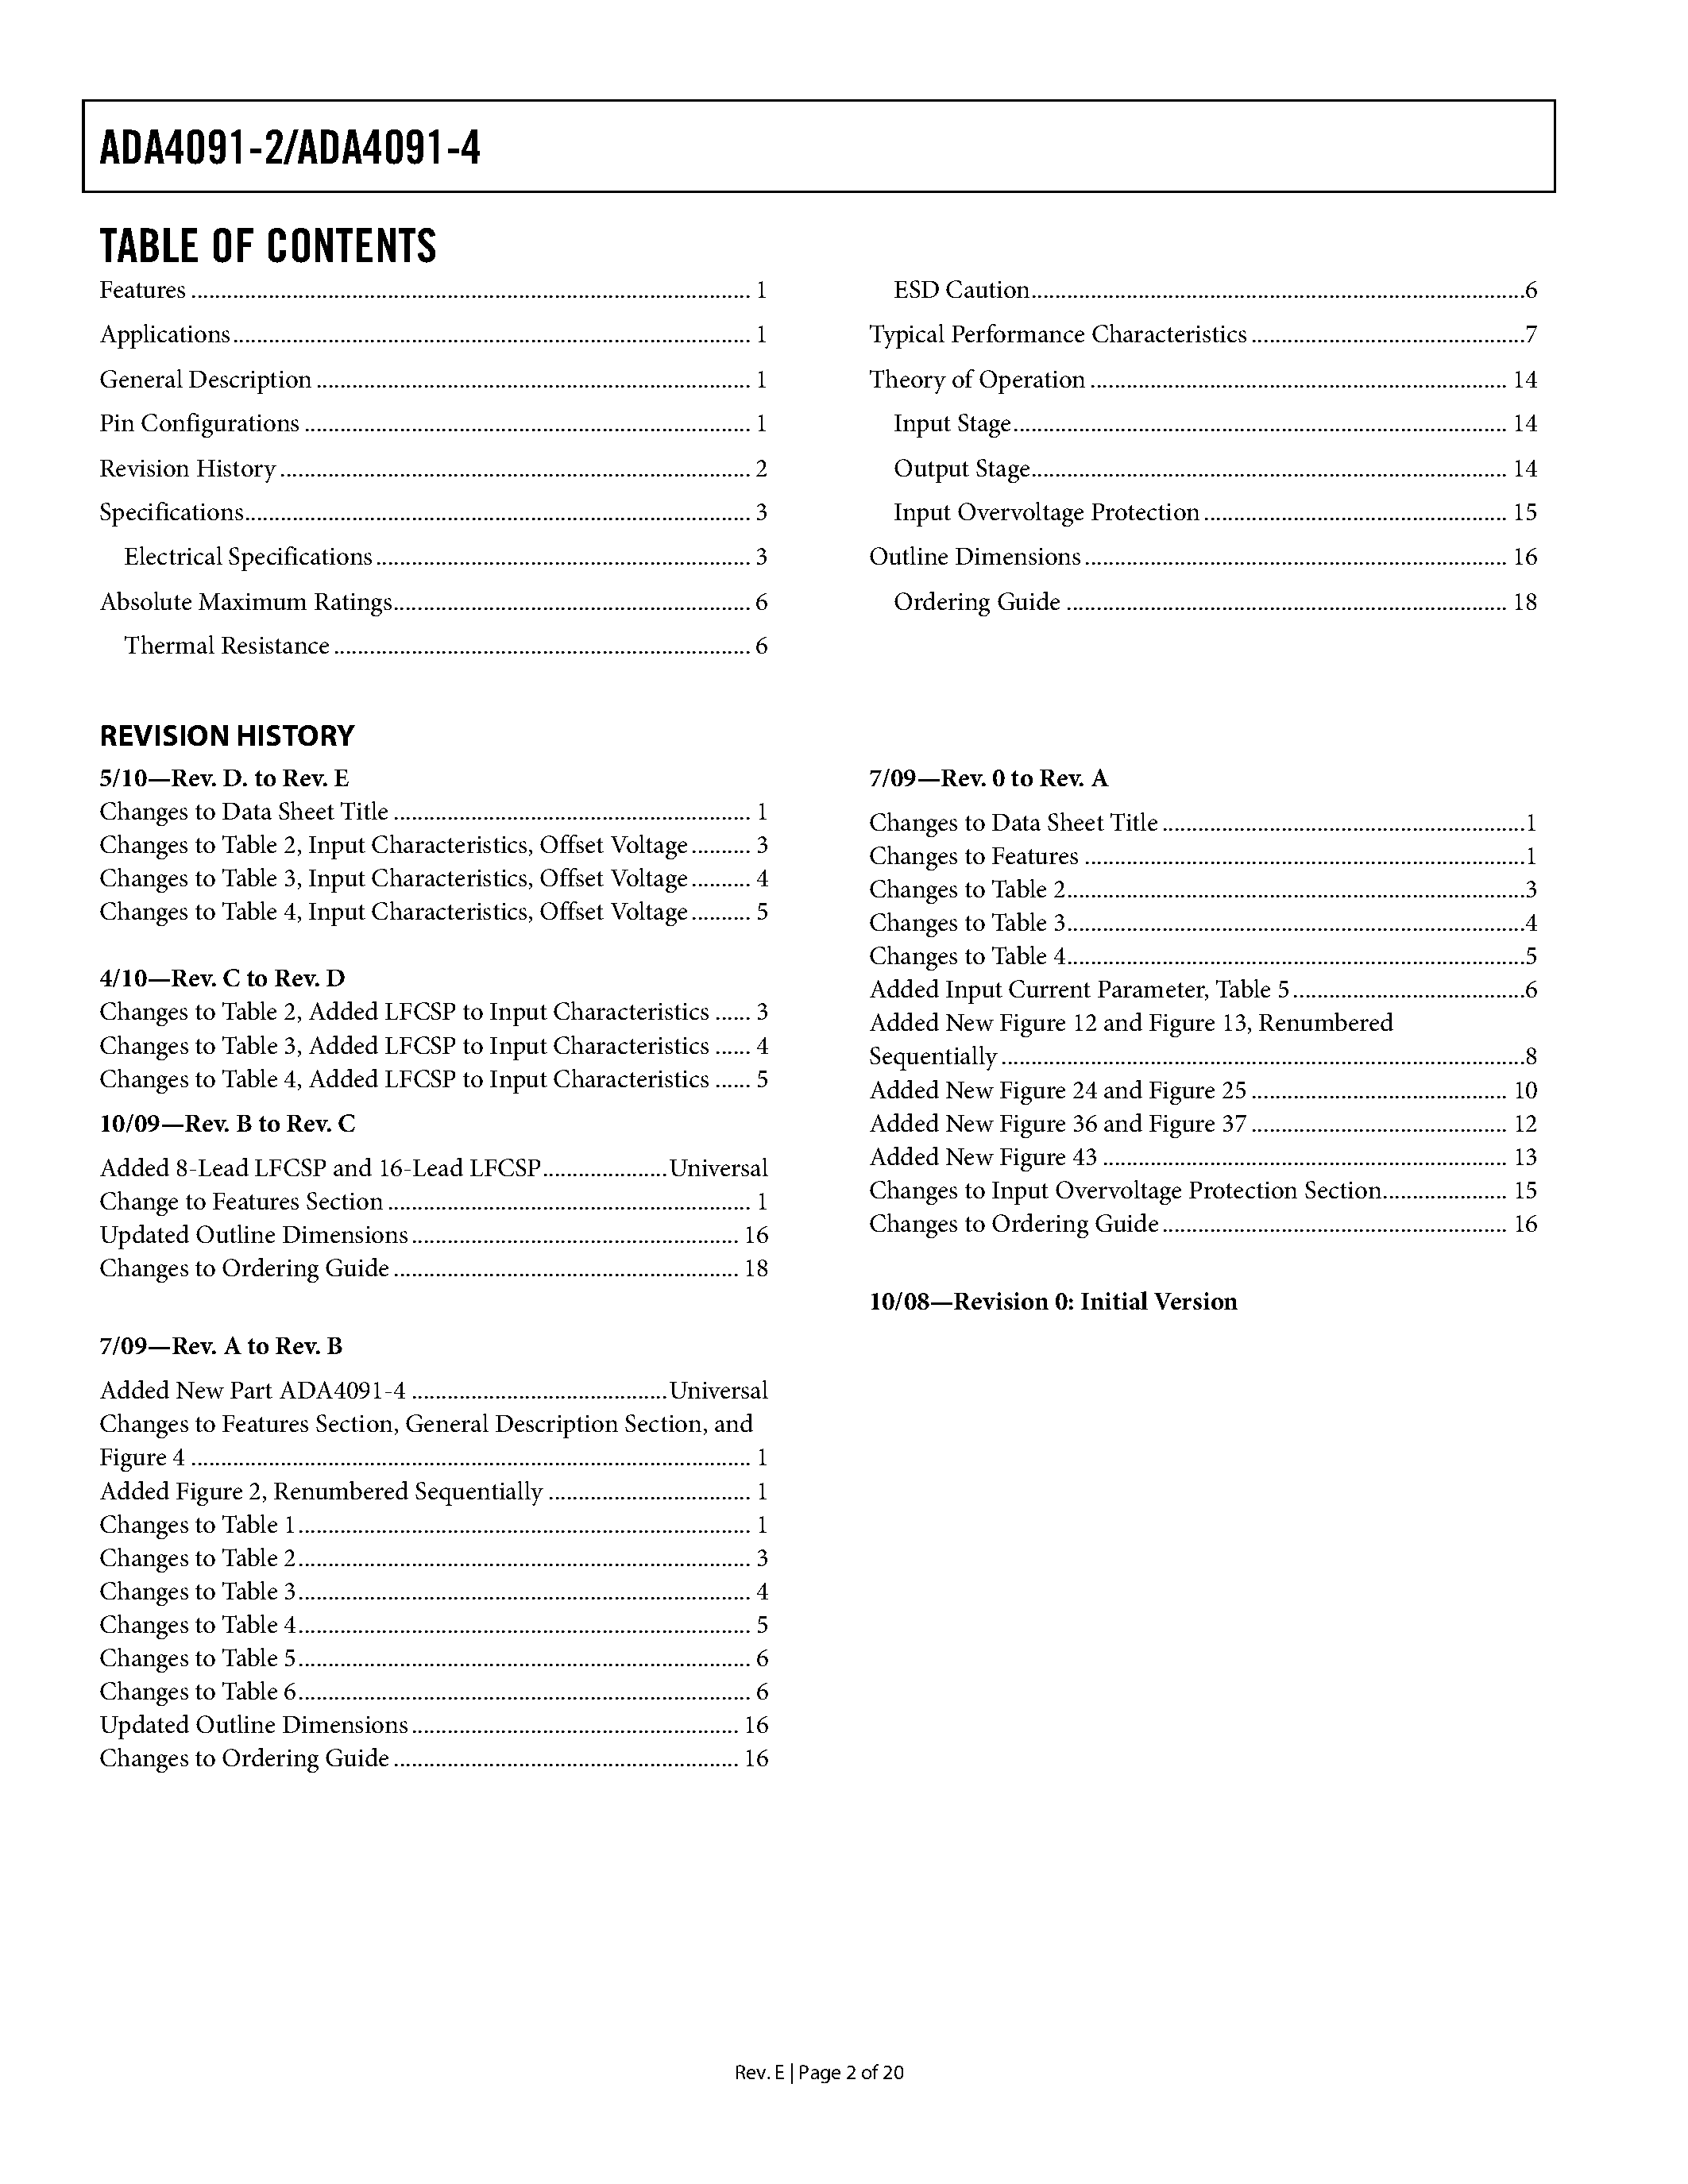 Datasheet ADA4091-2 - (ADA4091-2 / ADA4091-4) Operational Amplifier page 2